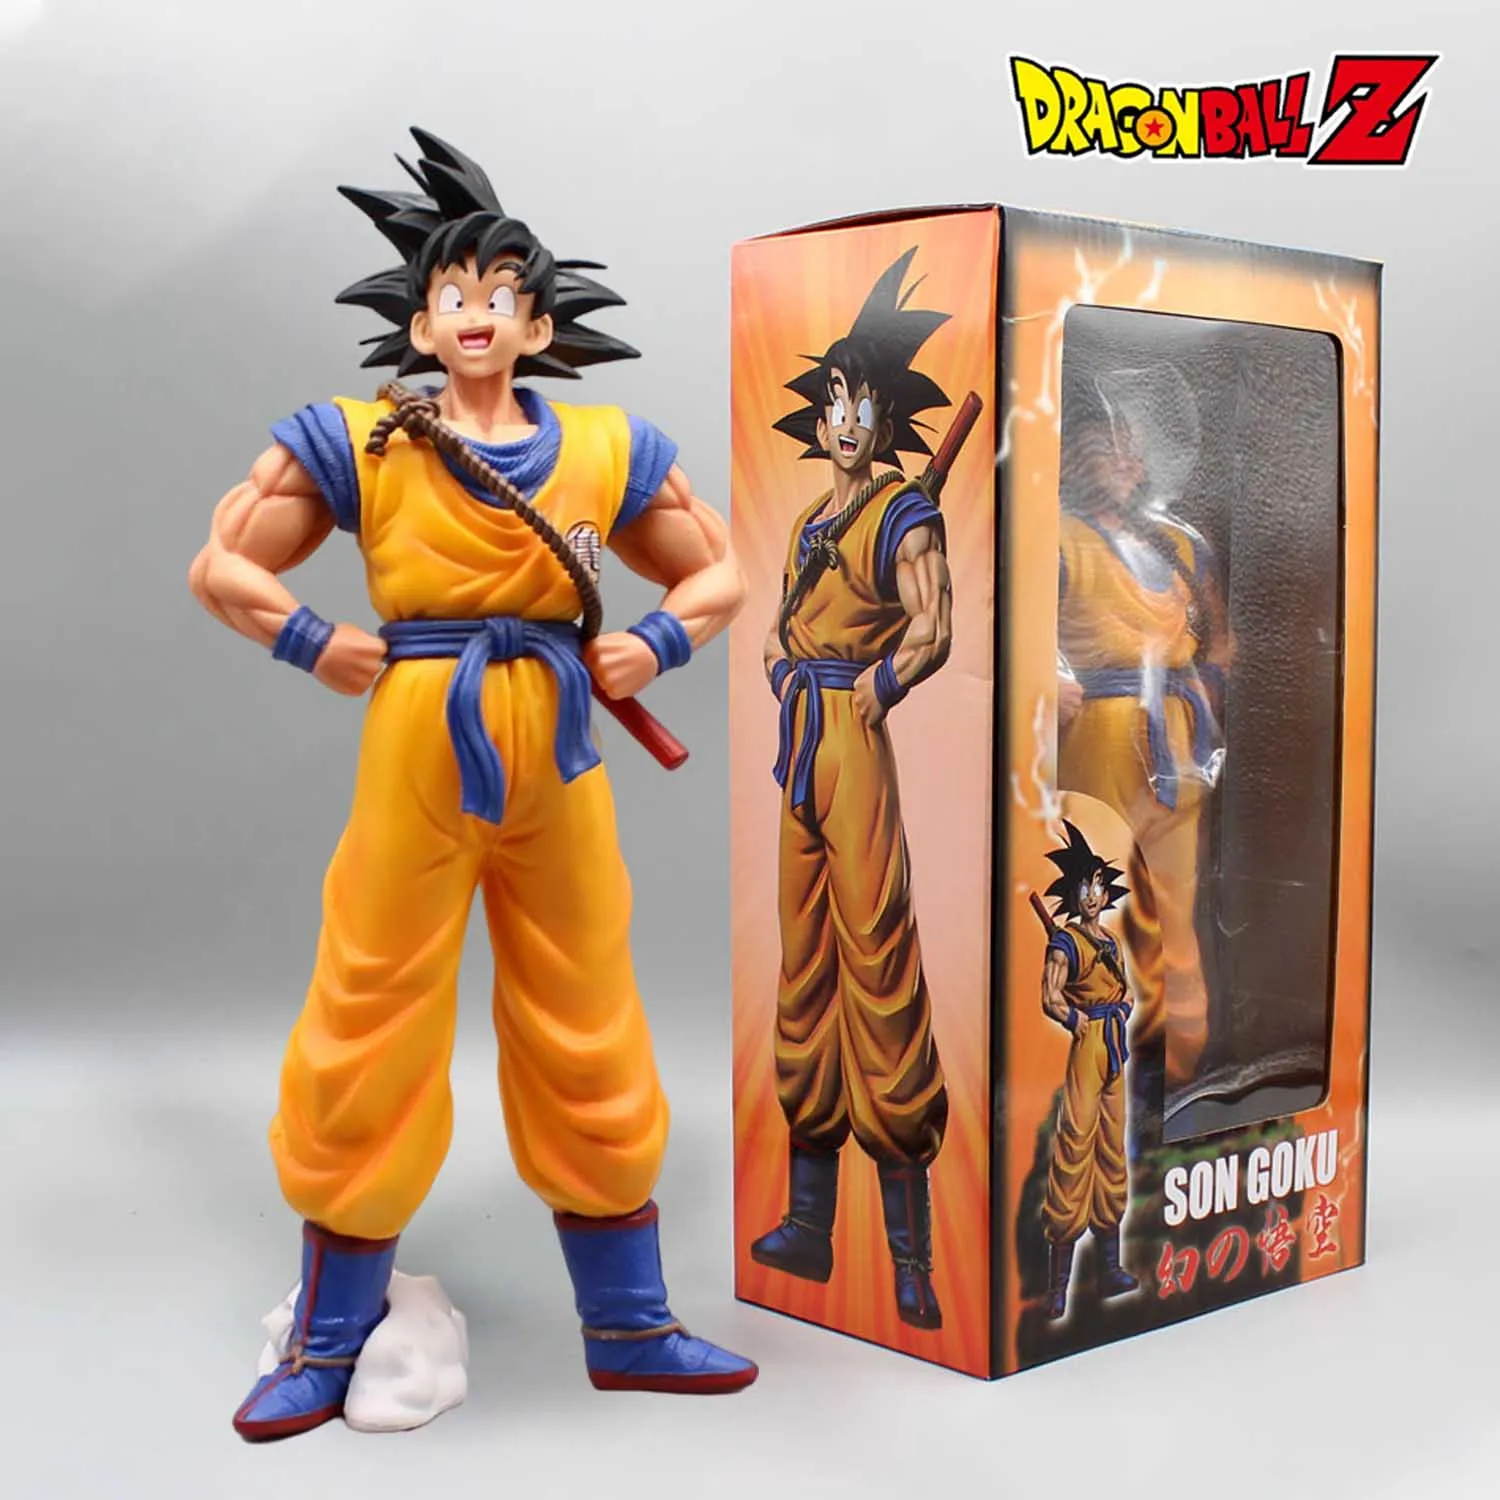 

29CM Dragon Ball Z Son Goku PVC Anime Toys Figure Super Saiyan Action Statue Collection Model Figurine Room Decoration Toy Gift